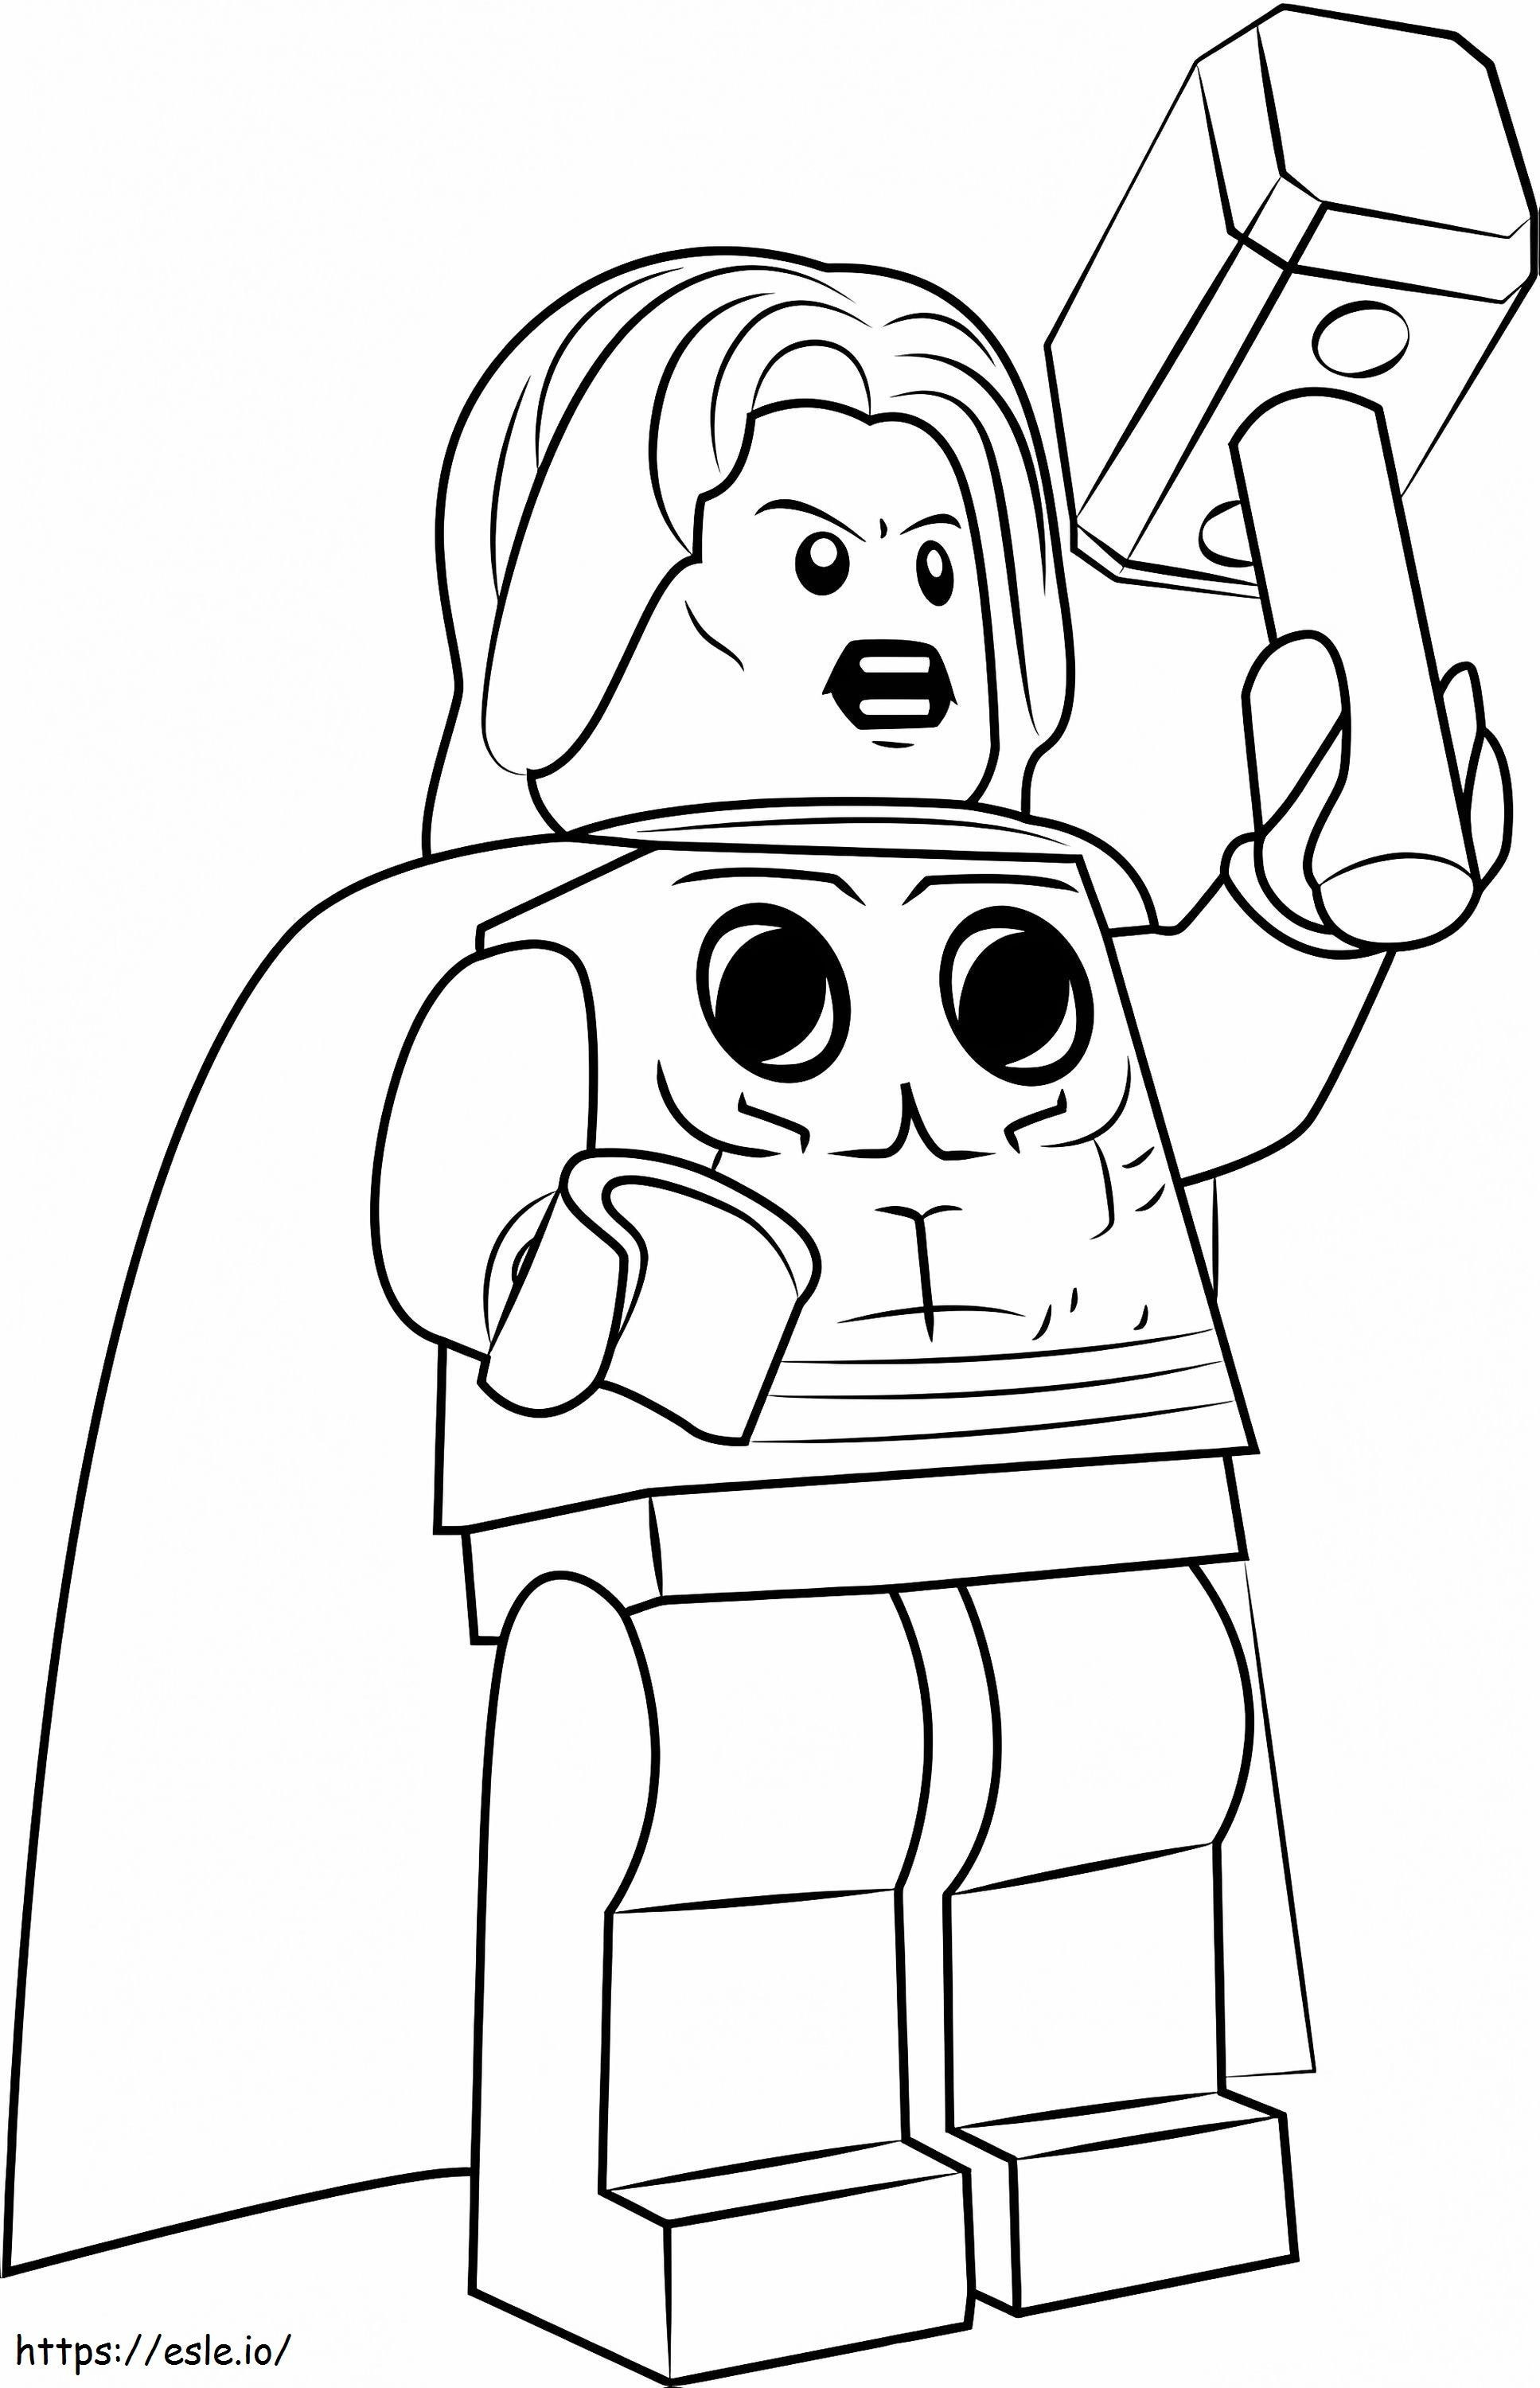 1530329794 Lego Thor1 para colorir